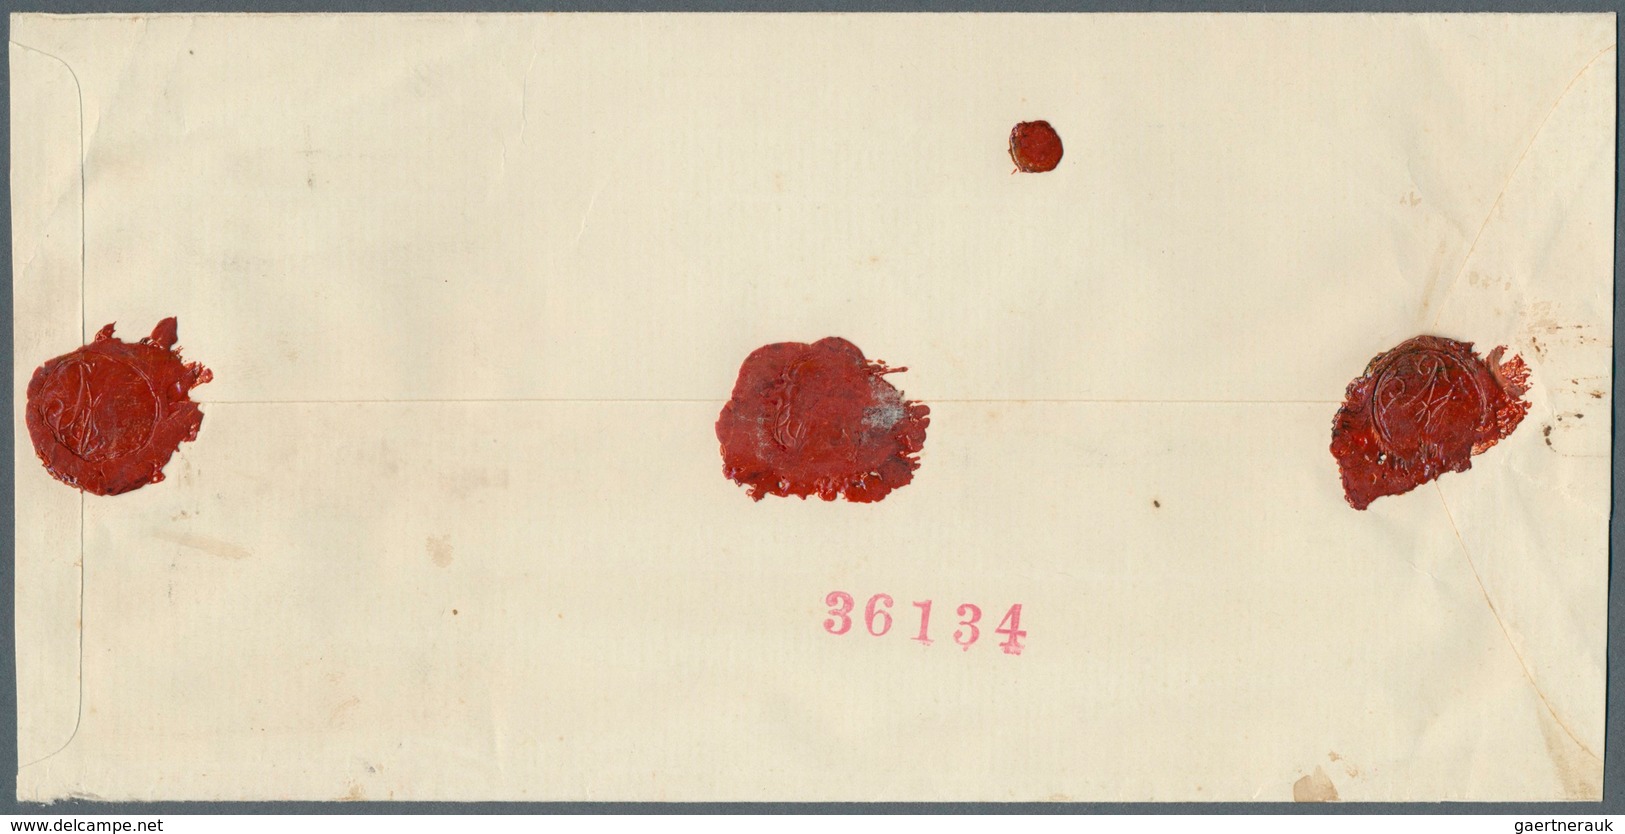 Mandschuko (Manchuko): 1941. Registered Envelope Addressed To The German Government In Poland Bearin - 1932-45 Manchuria (Manchukuo)